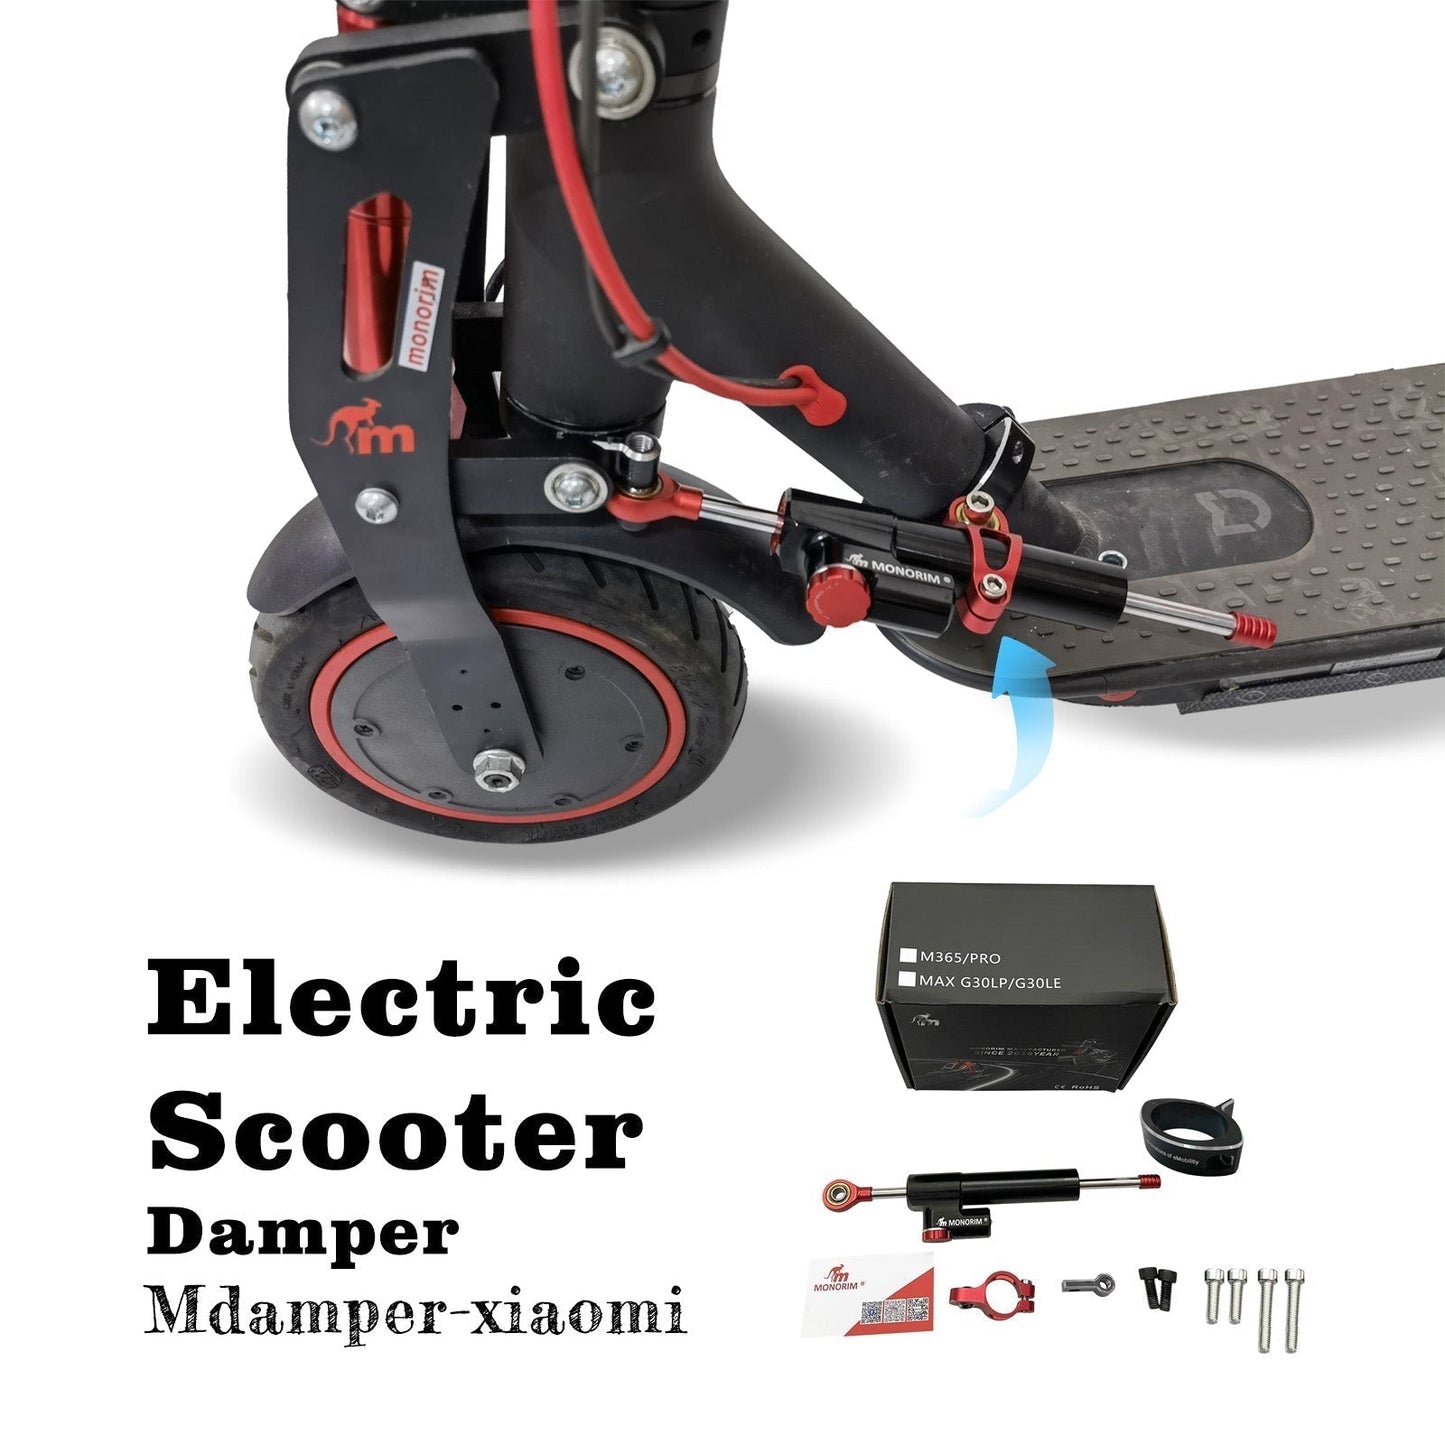 Monorim Steering Damping, Damper for Aovo pro es80 Scooter, High-speed Stabilizer